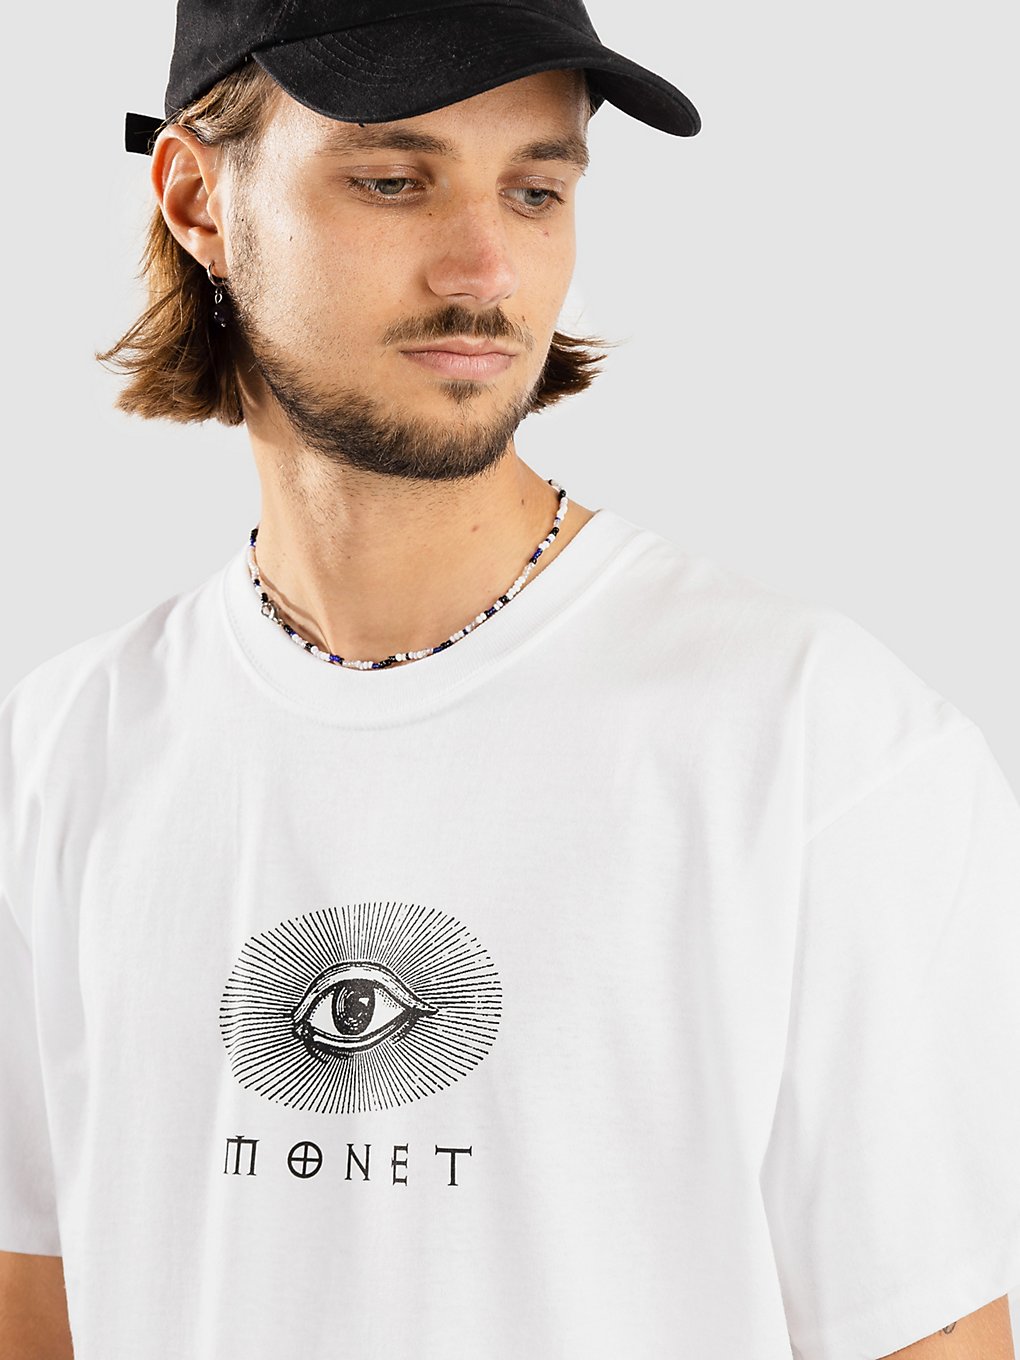 Monet Skateboards Dead T-Shirt white kaufen